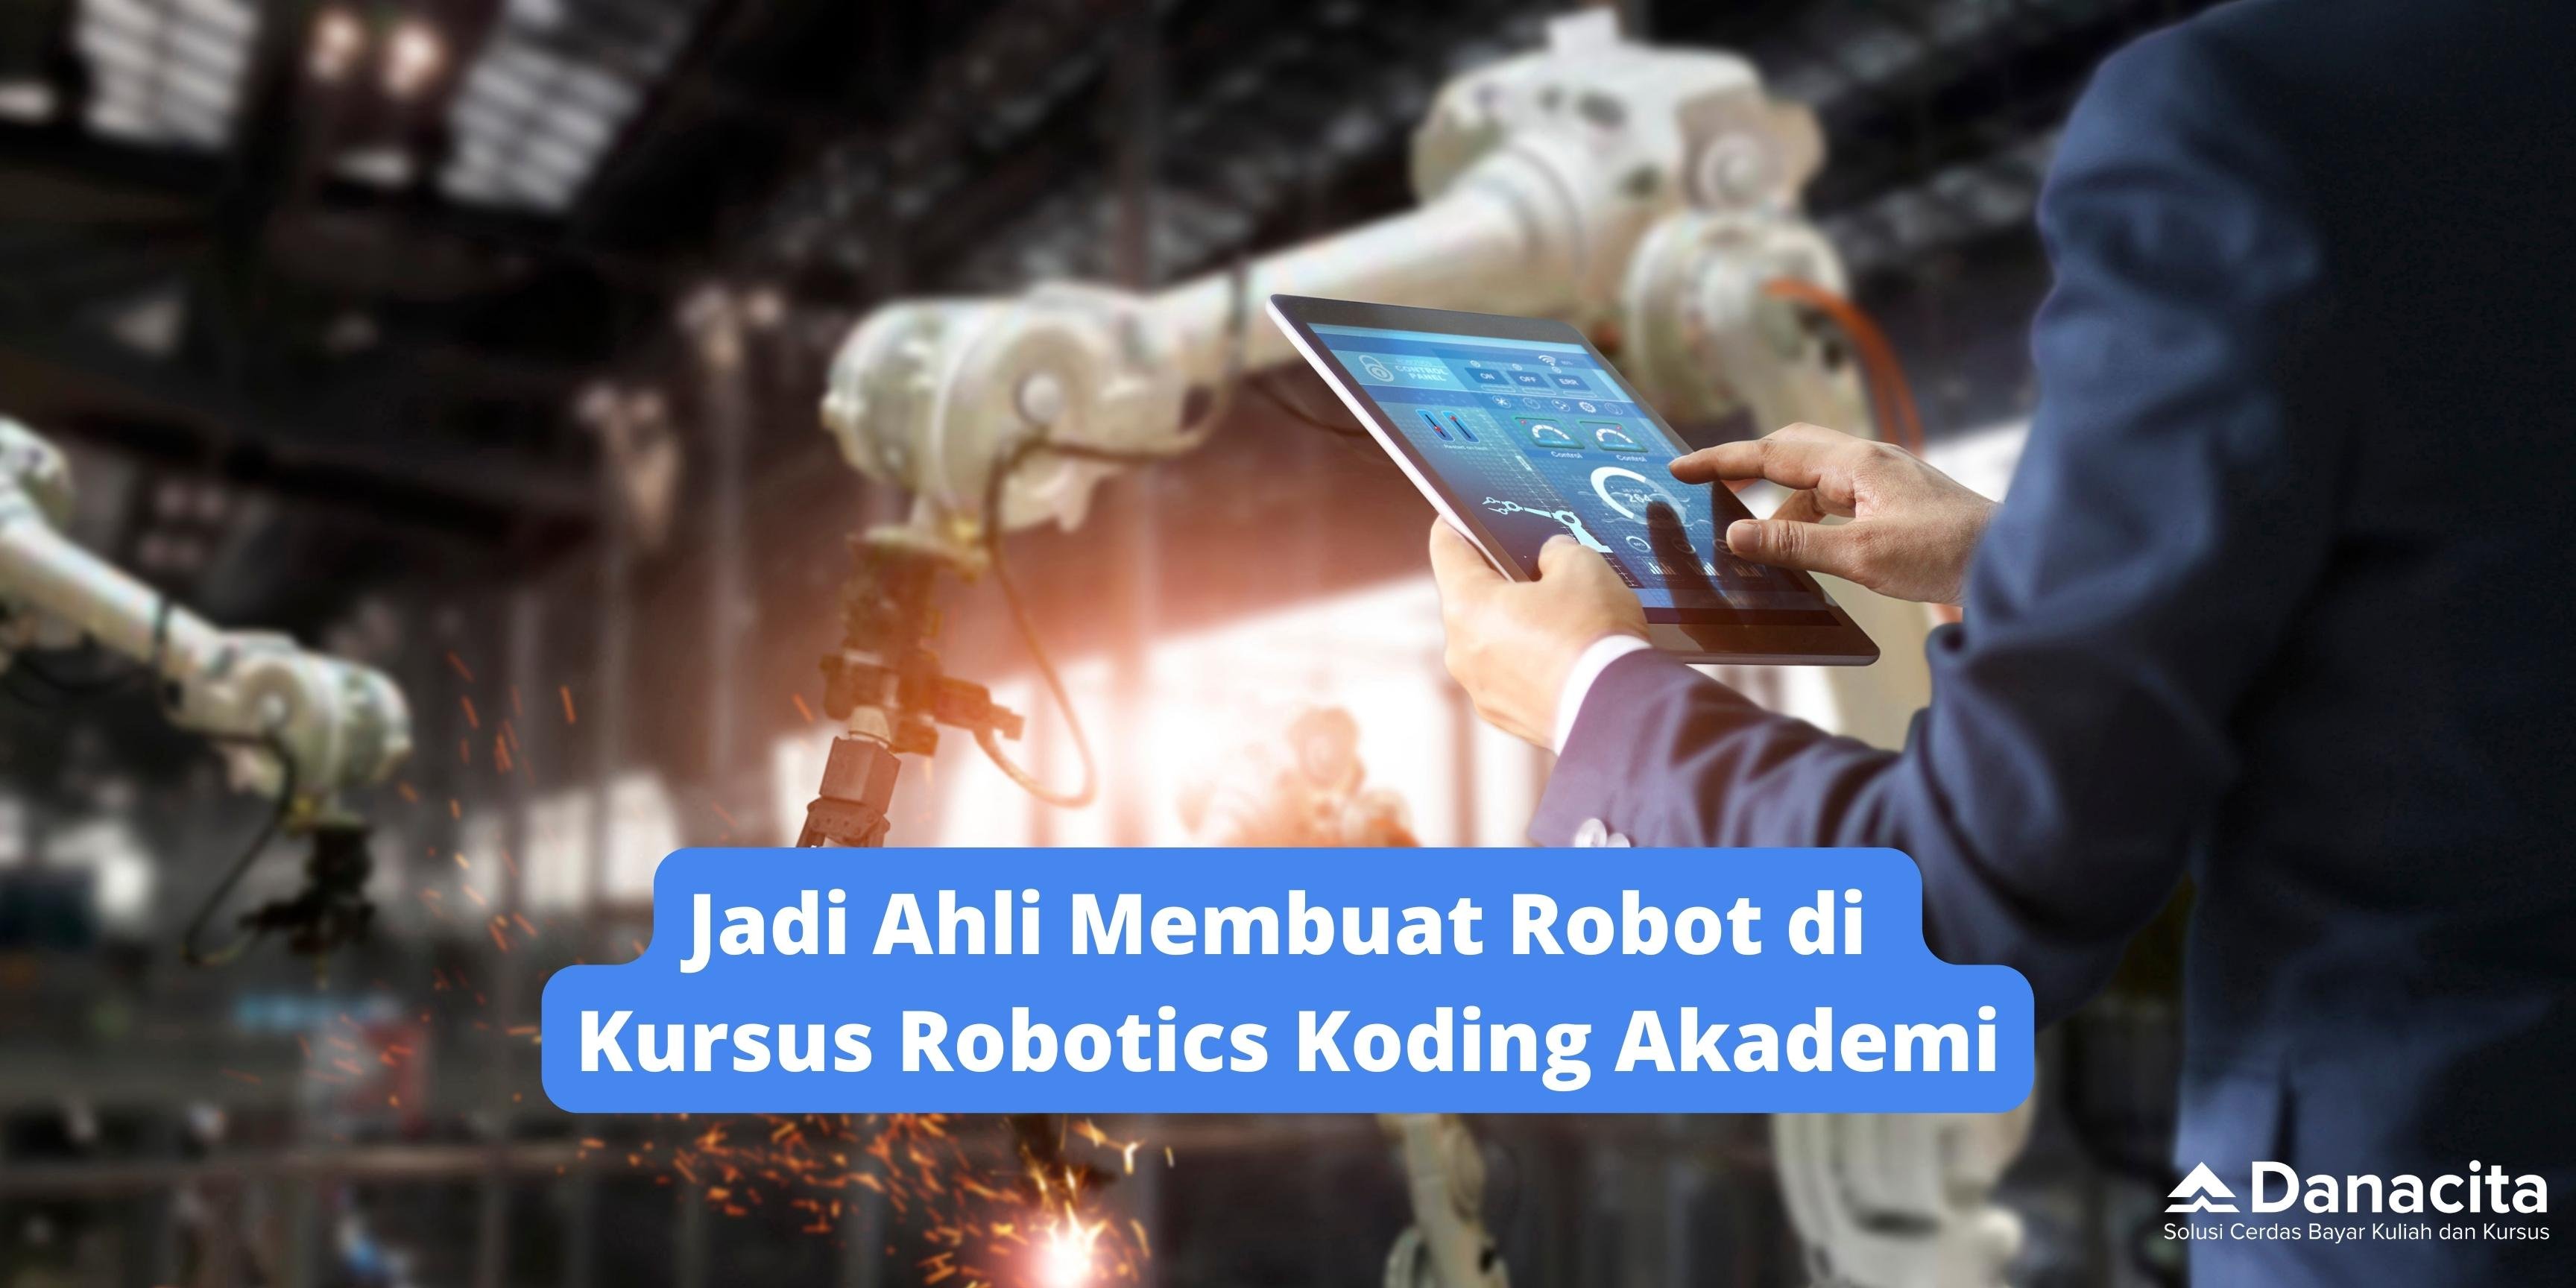 Biaya-Bootcamp-Robotic-Koding-Akademi-Blog-Danacita